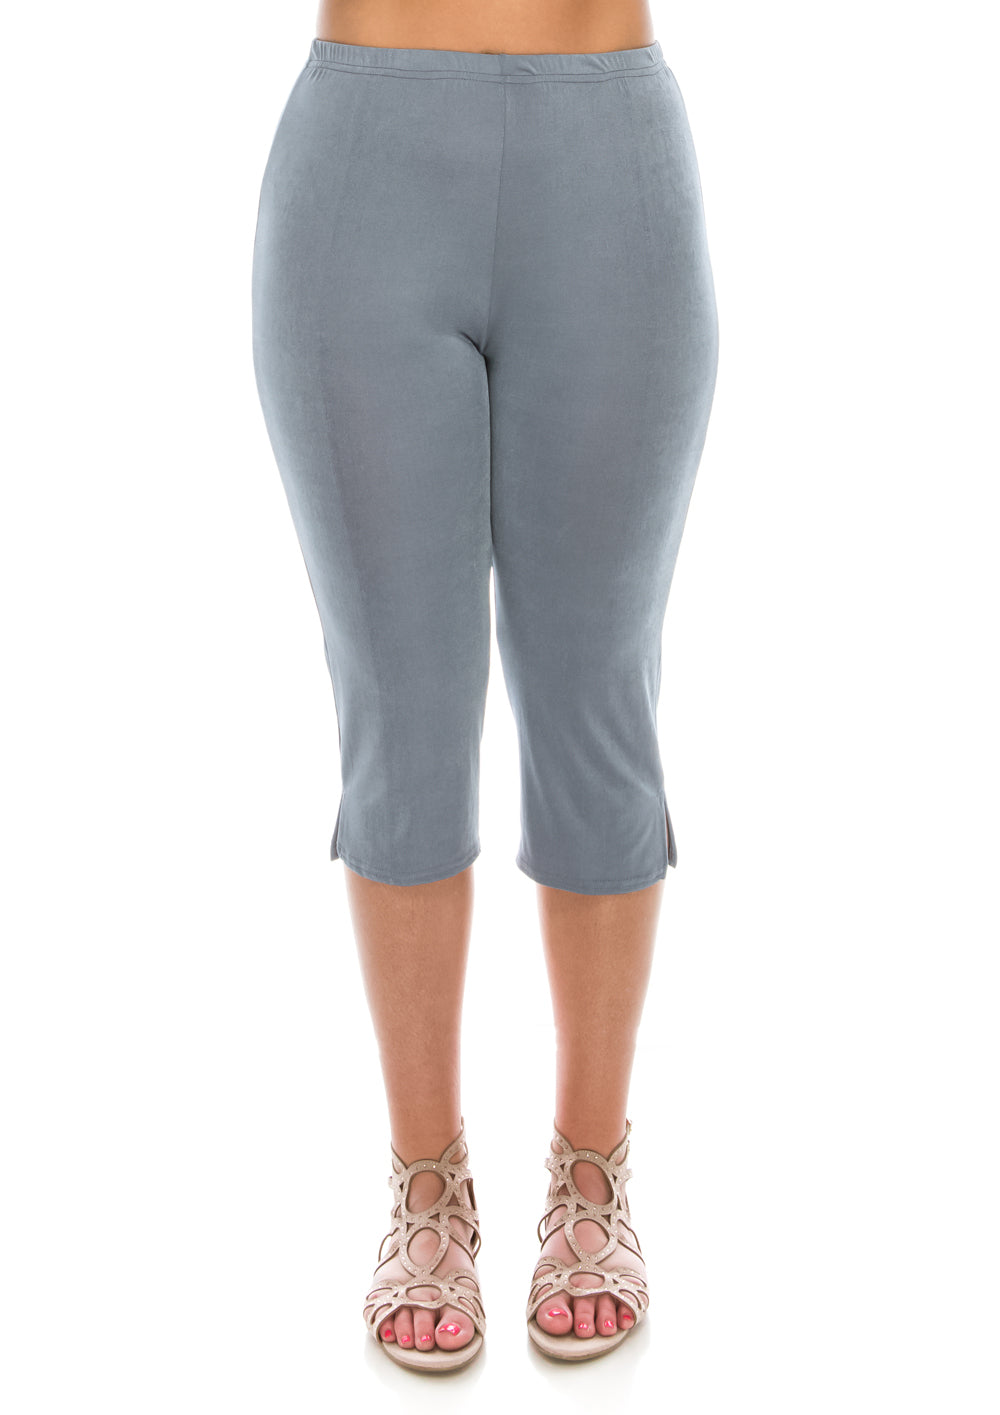 Jostar Women's Stretchy Capri Pants, 502BN - Jostar Online